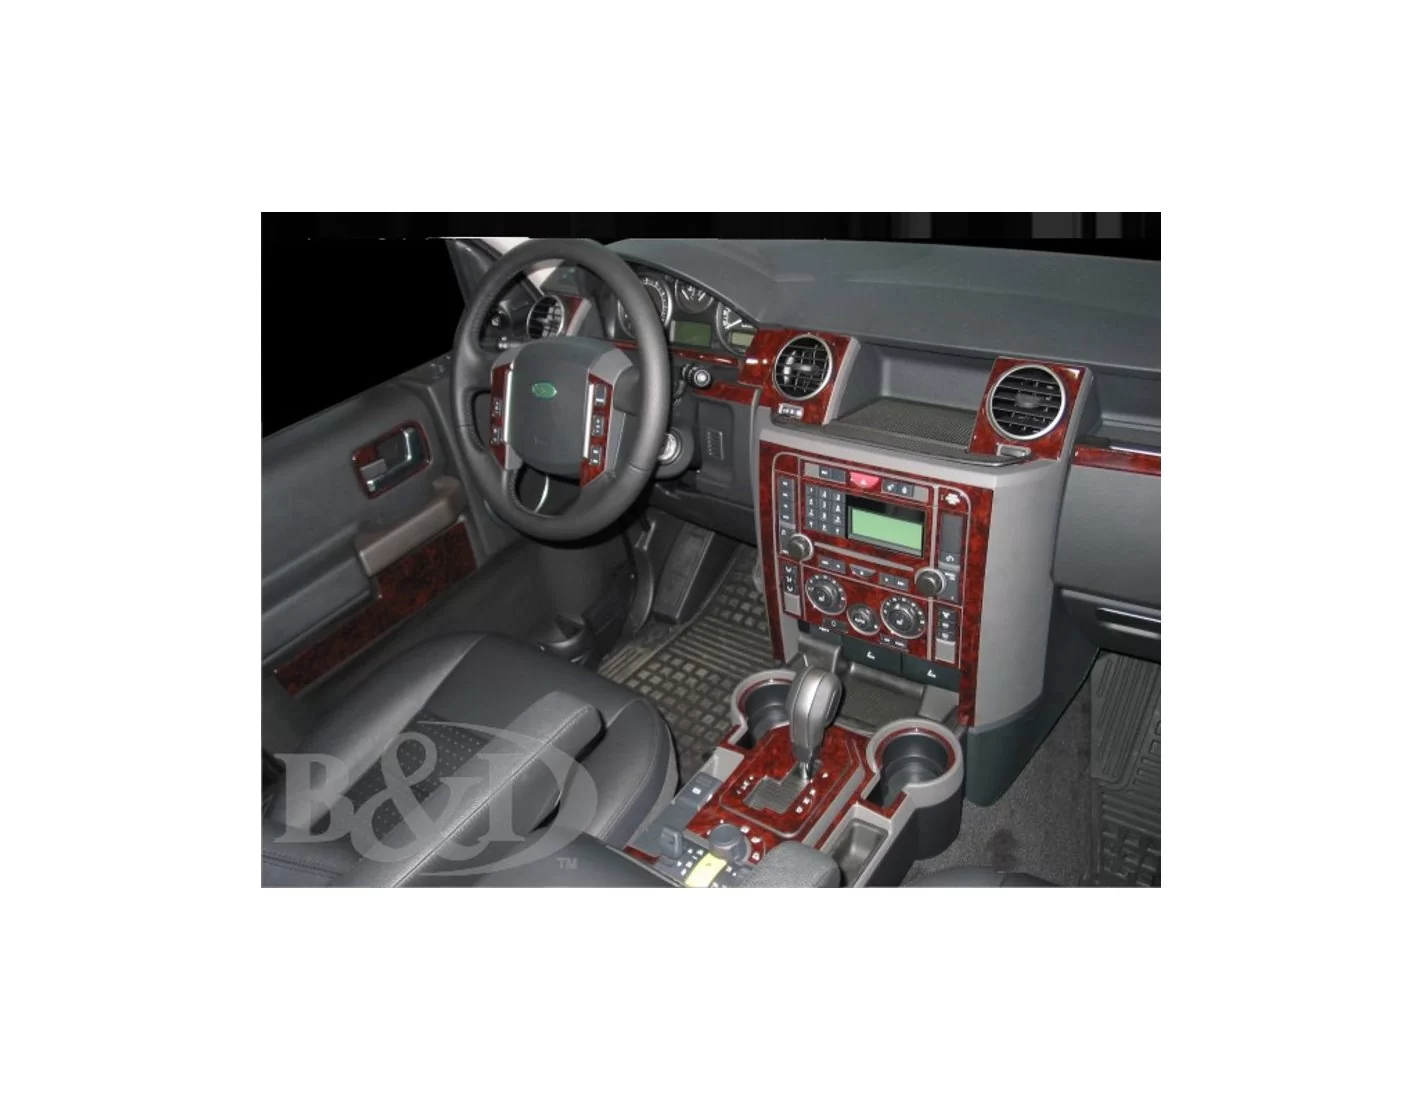 Land Rover Discovery 3 2005-UP Full Set Interior BD Dash Trim Kit